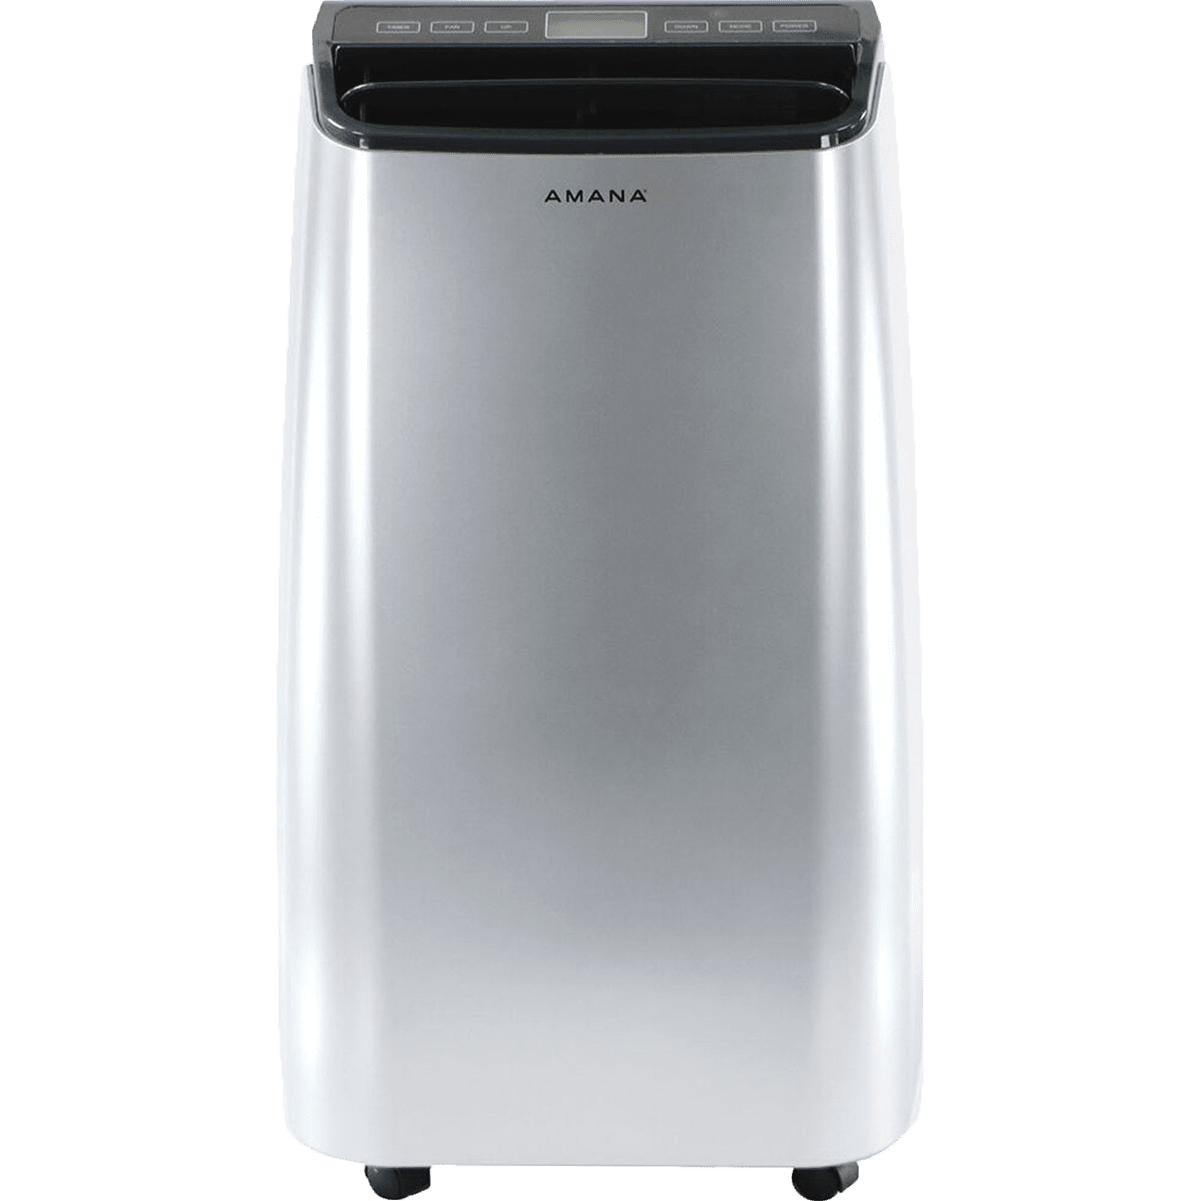 Amana 10,000 BTU Portable Air Conditioner Black/Silver - Primary View